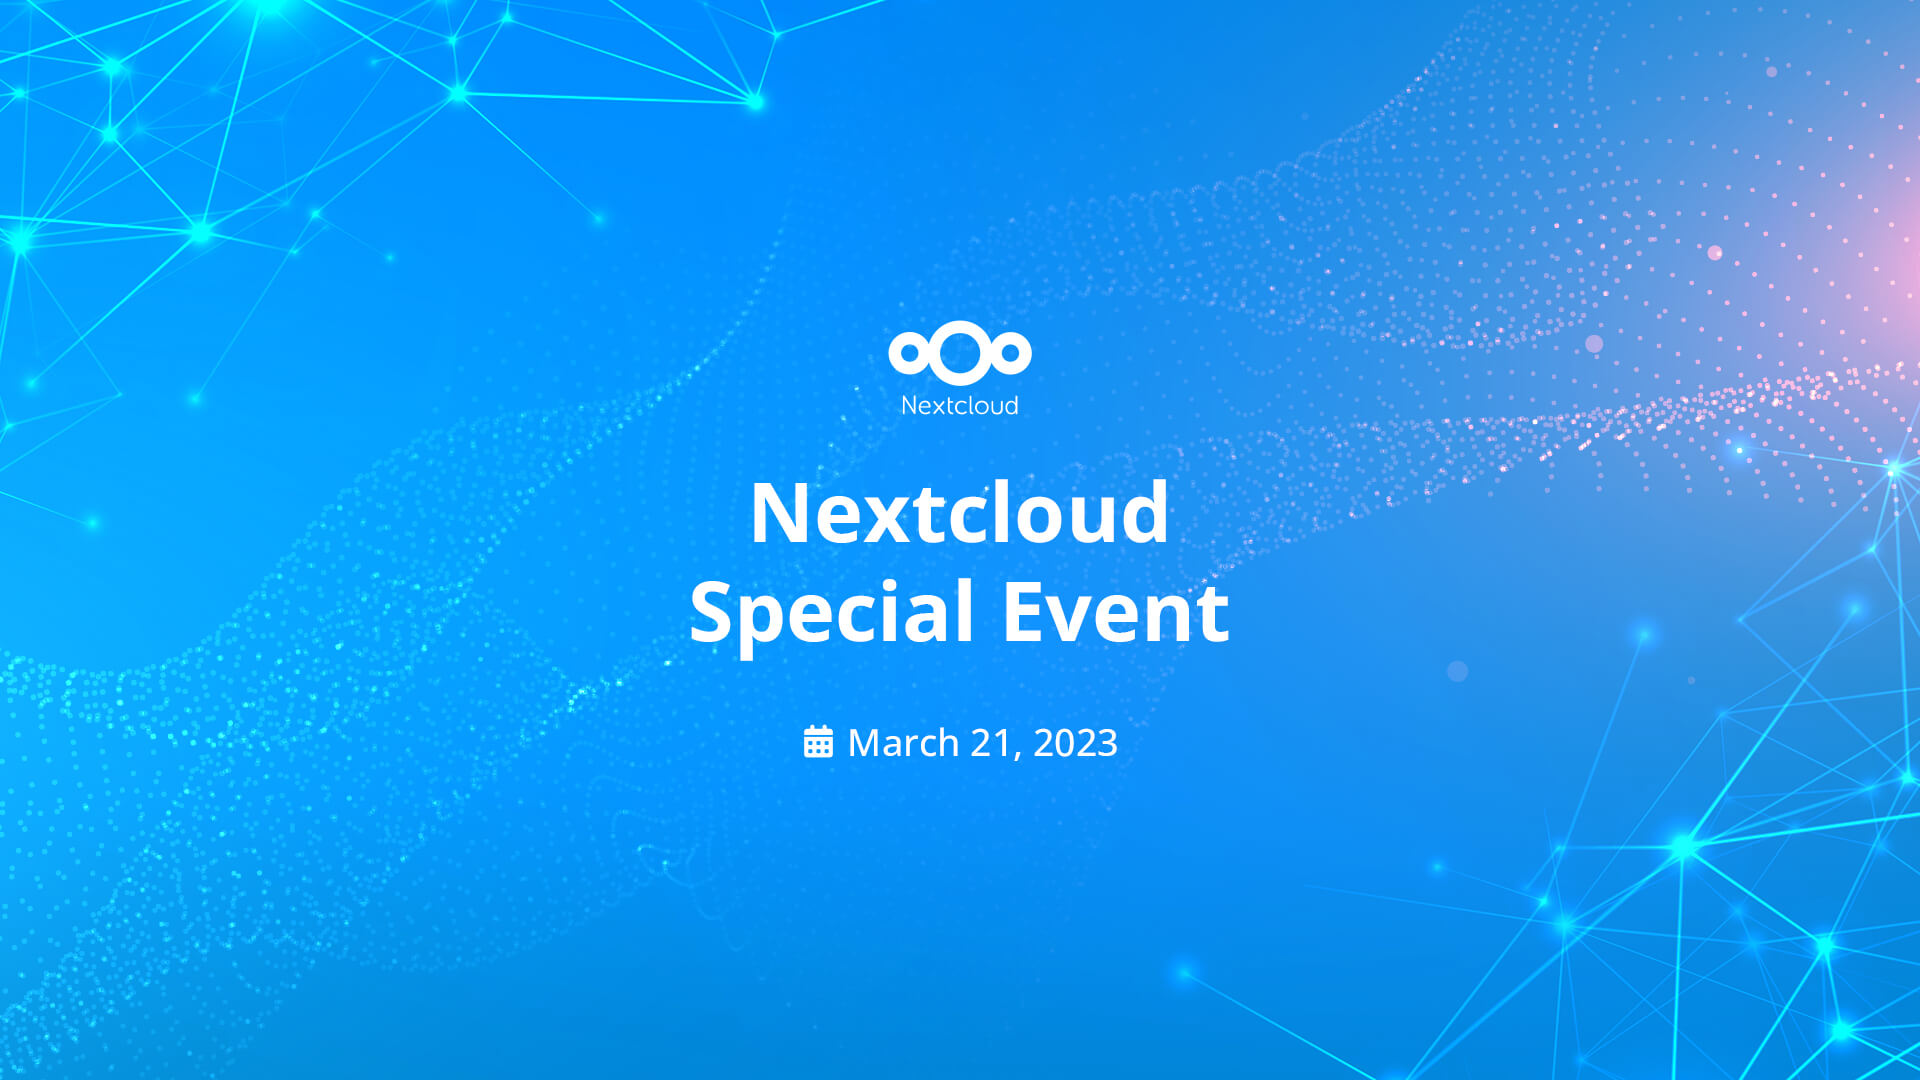 Nextcloud special event